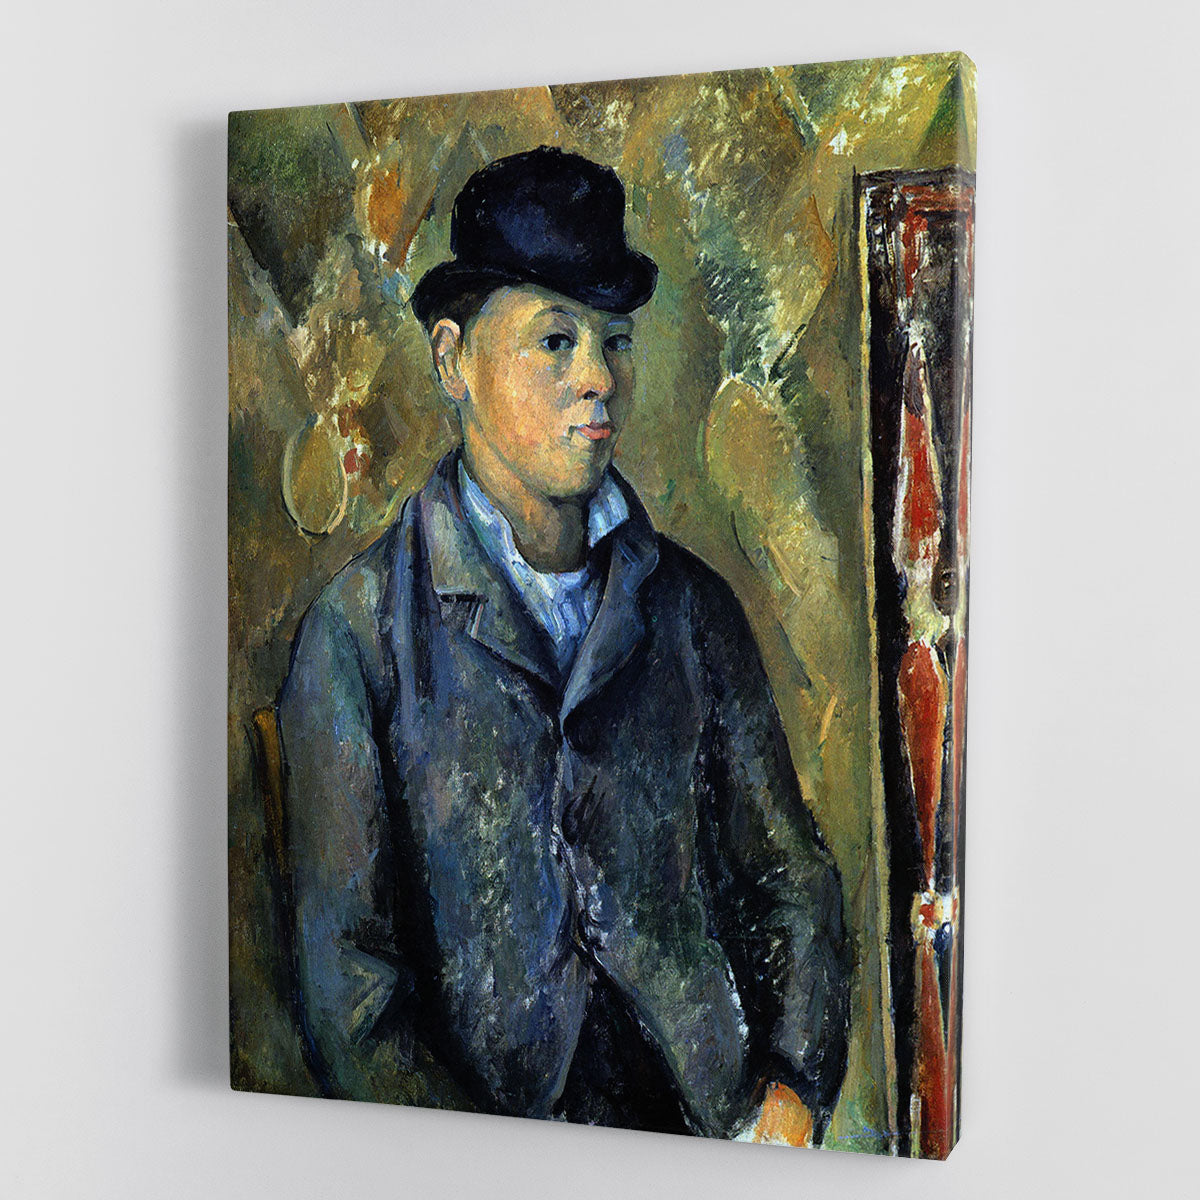 Portrait of his son Paul CÇzanne by Cezanne Canvas Print or Poster - Canvas Art Rocks - 1